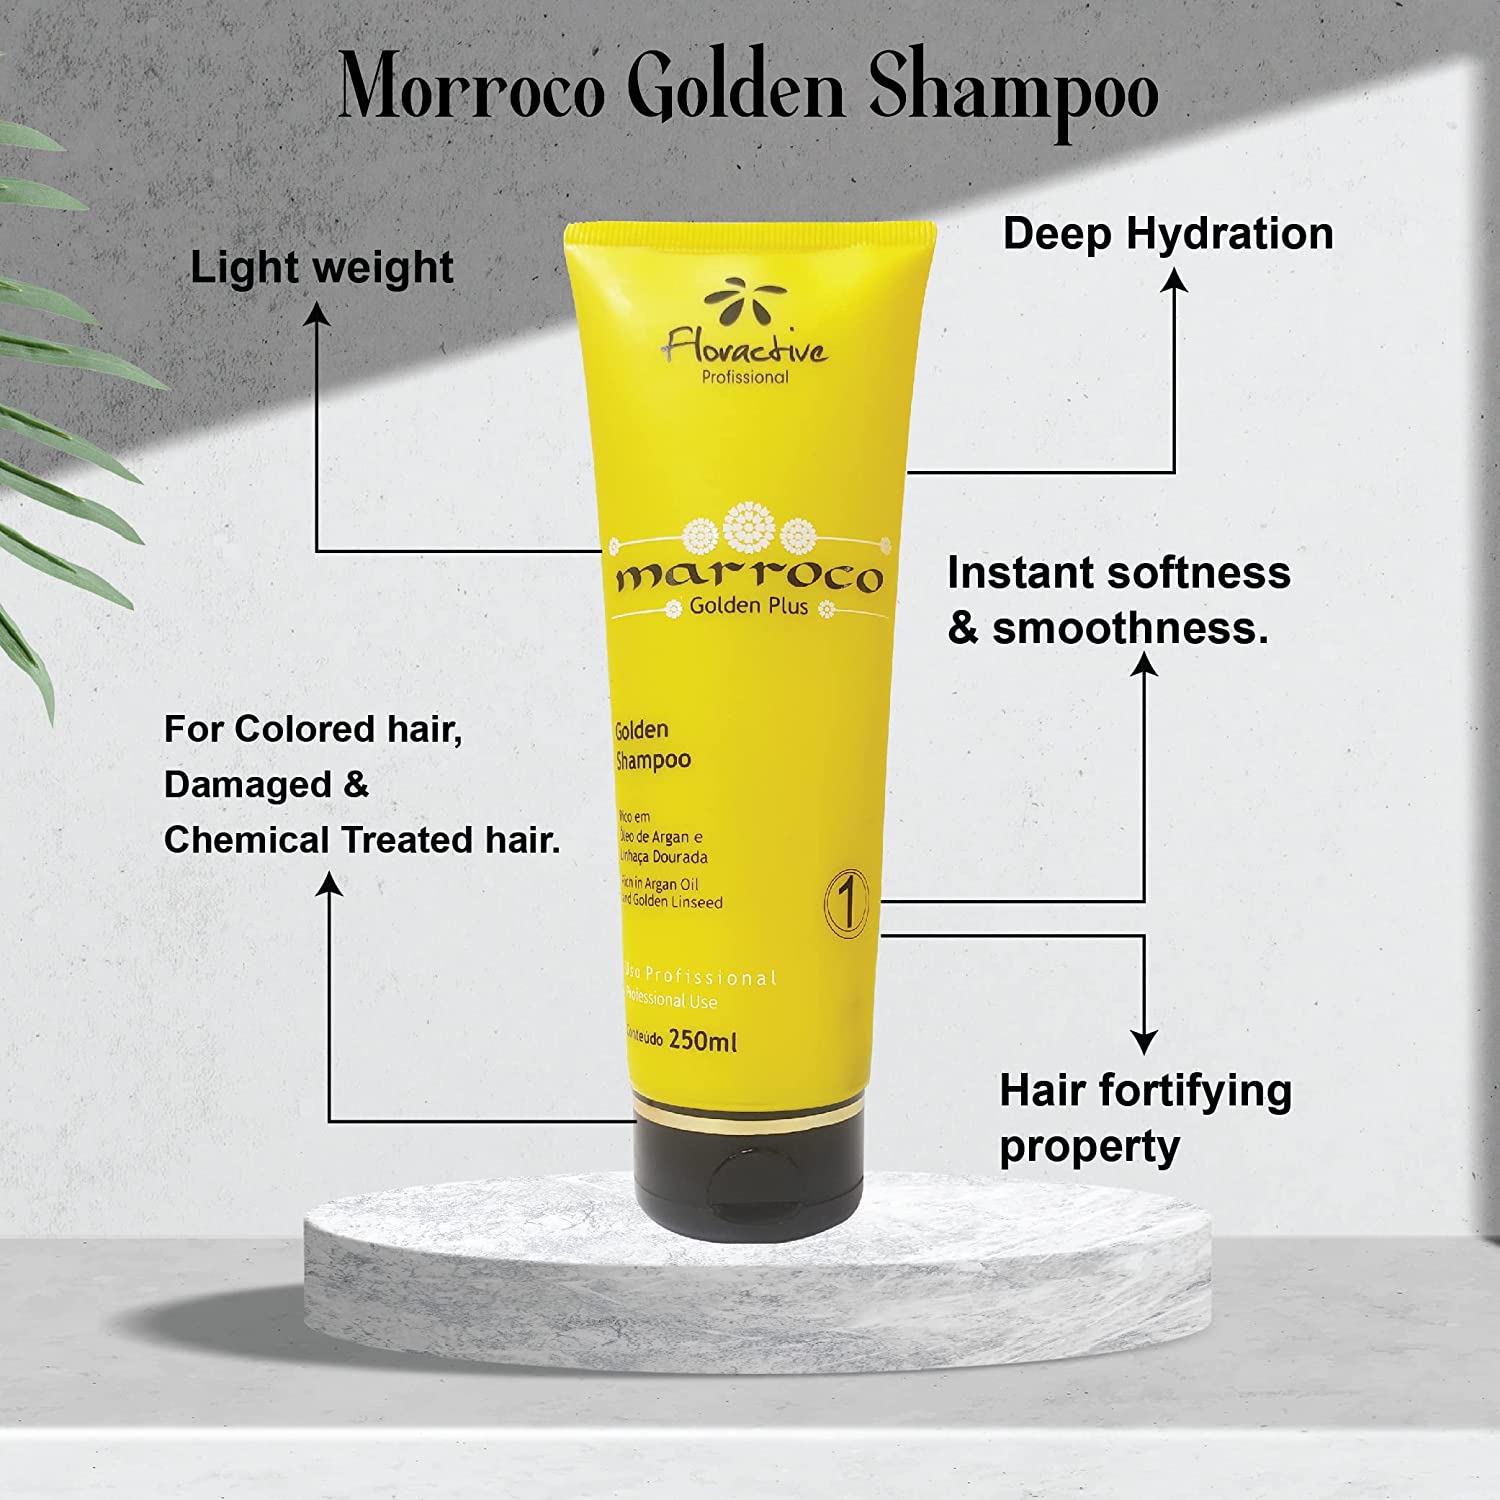 Flovactive Profissional Marroco Golden Plus Shampoo (250ml) Floractive Profissional